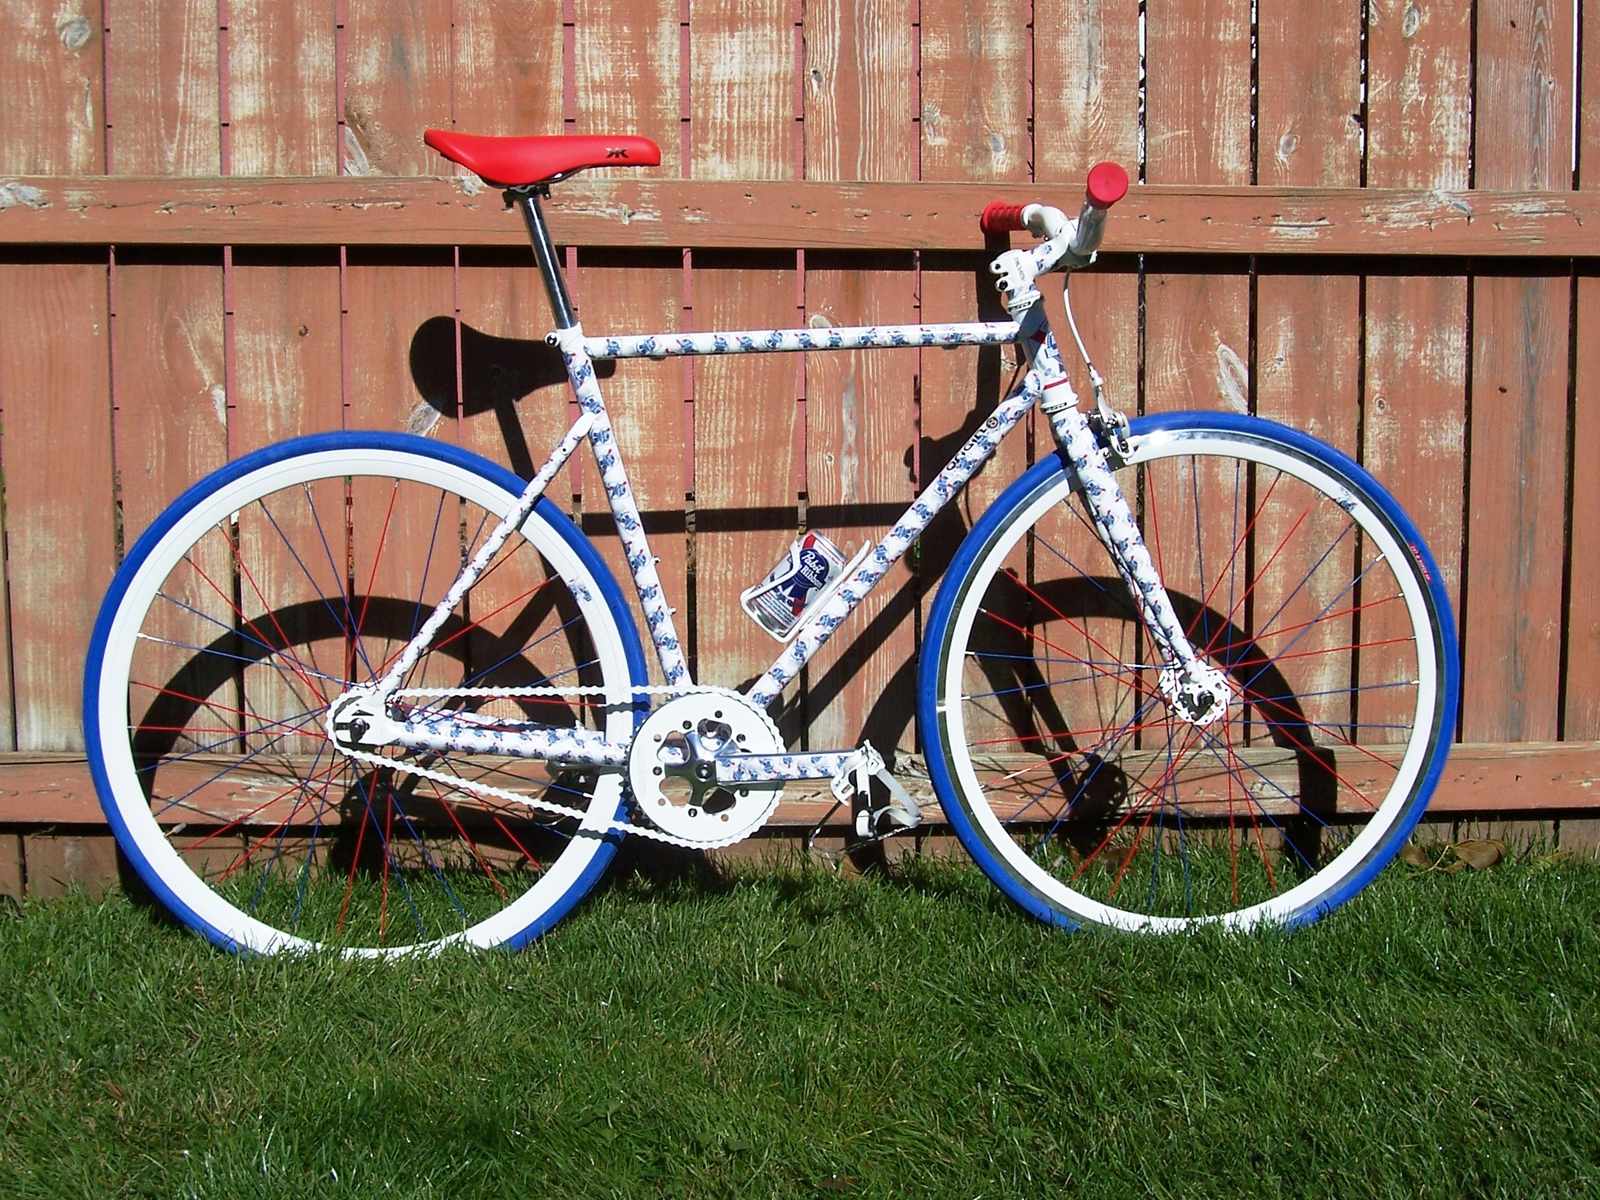 pabst blue ribbon cycling jersey